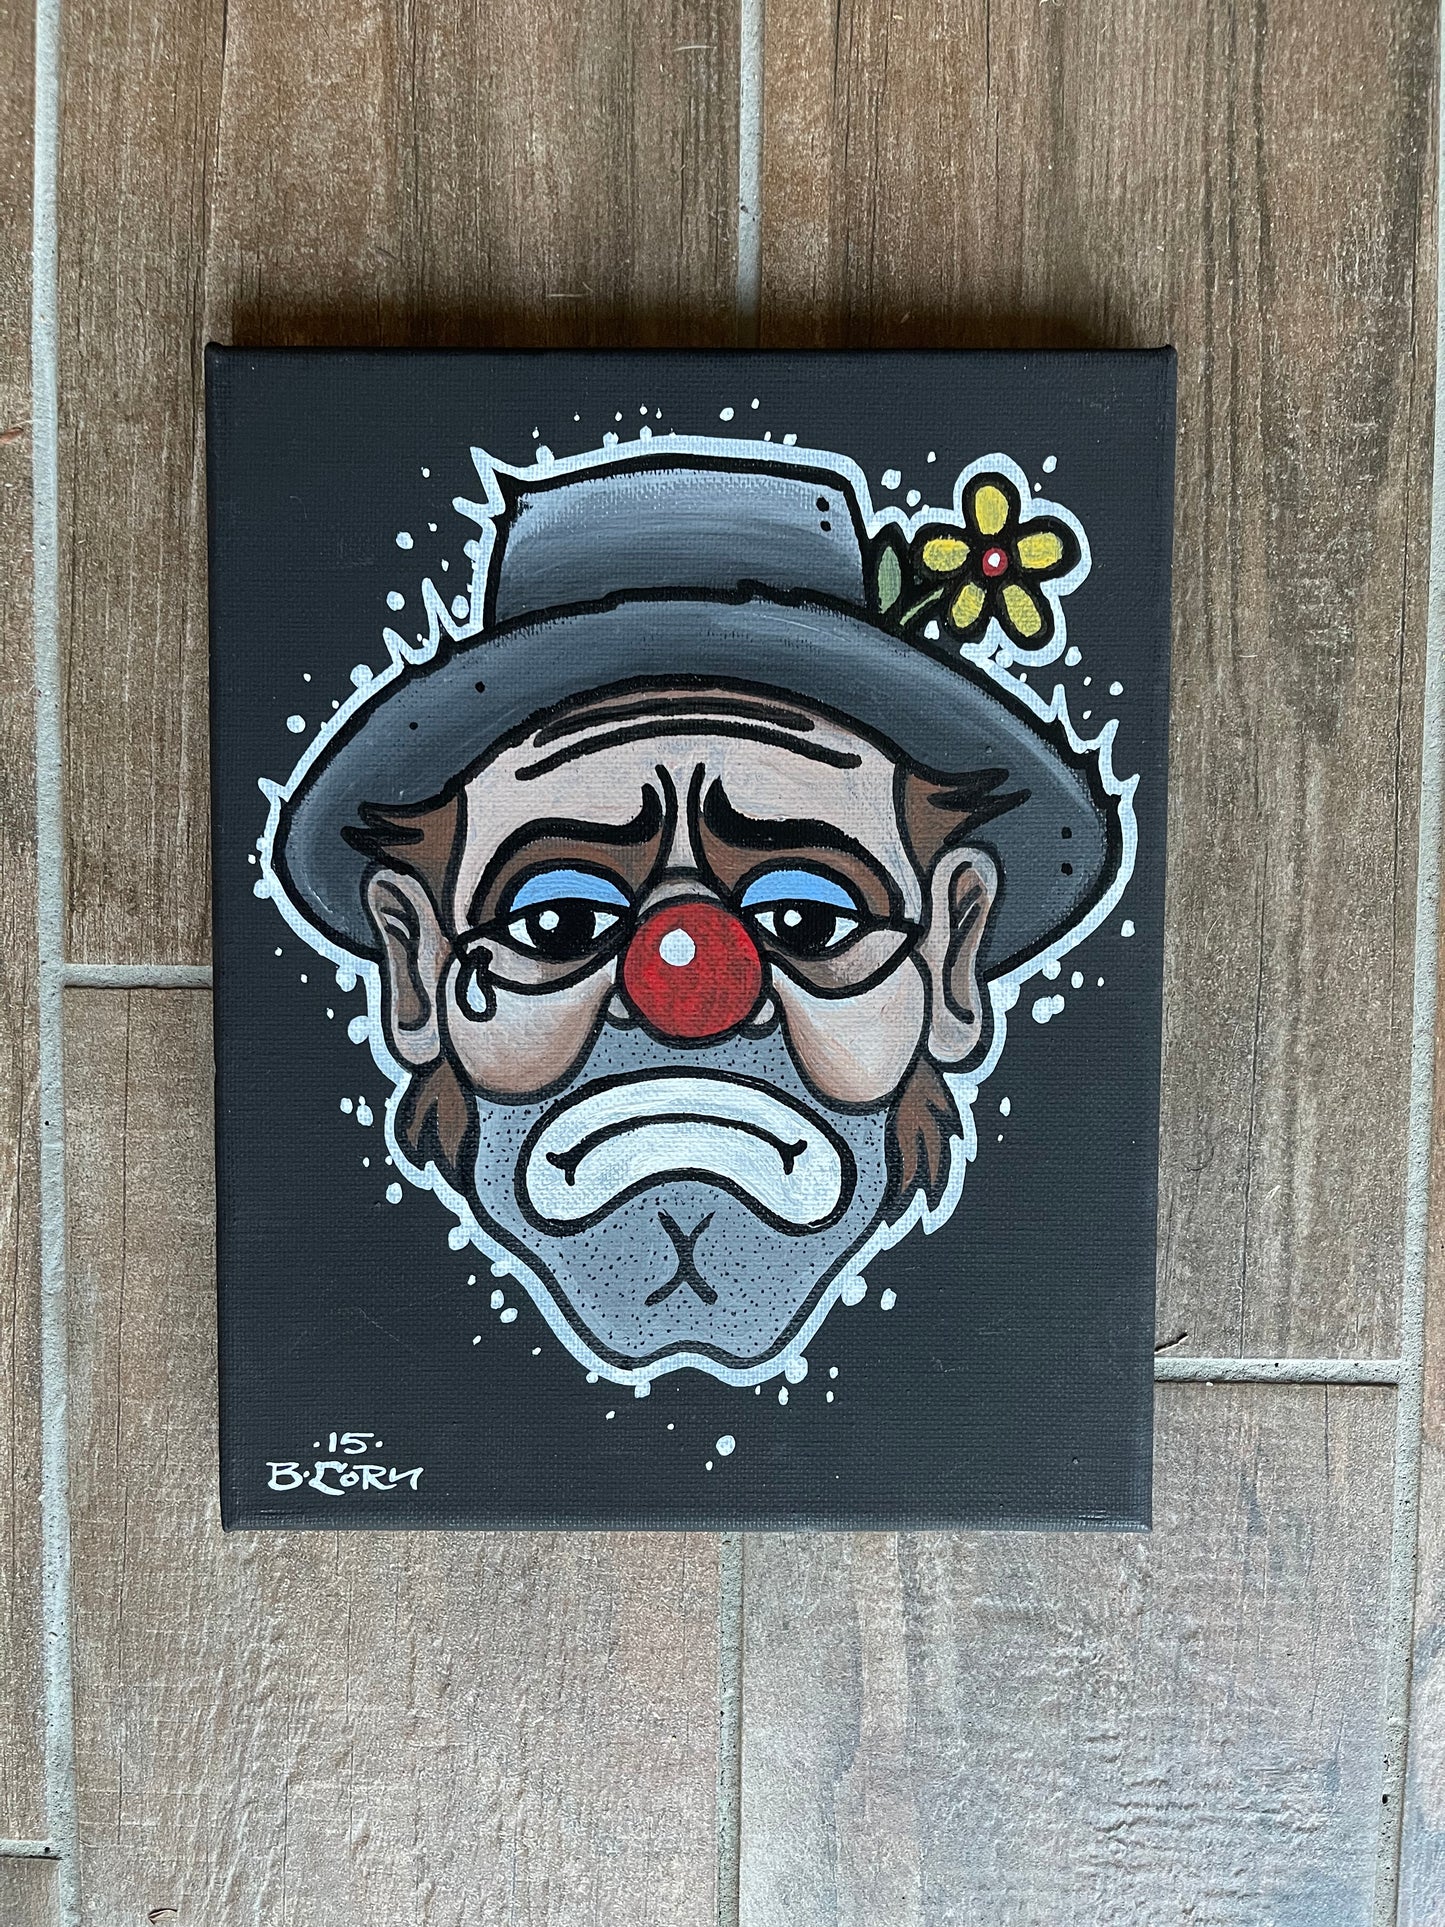 Sad clown painting